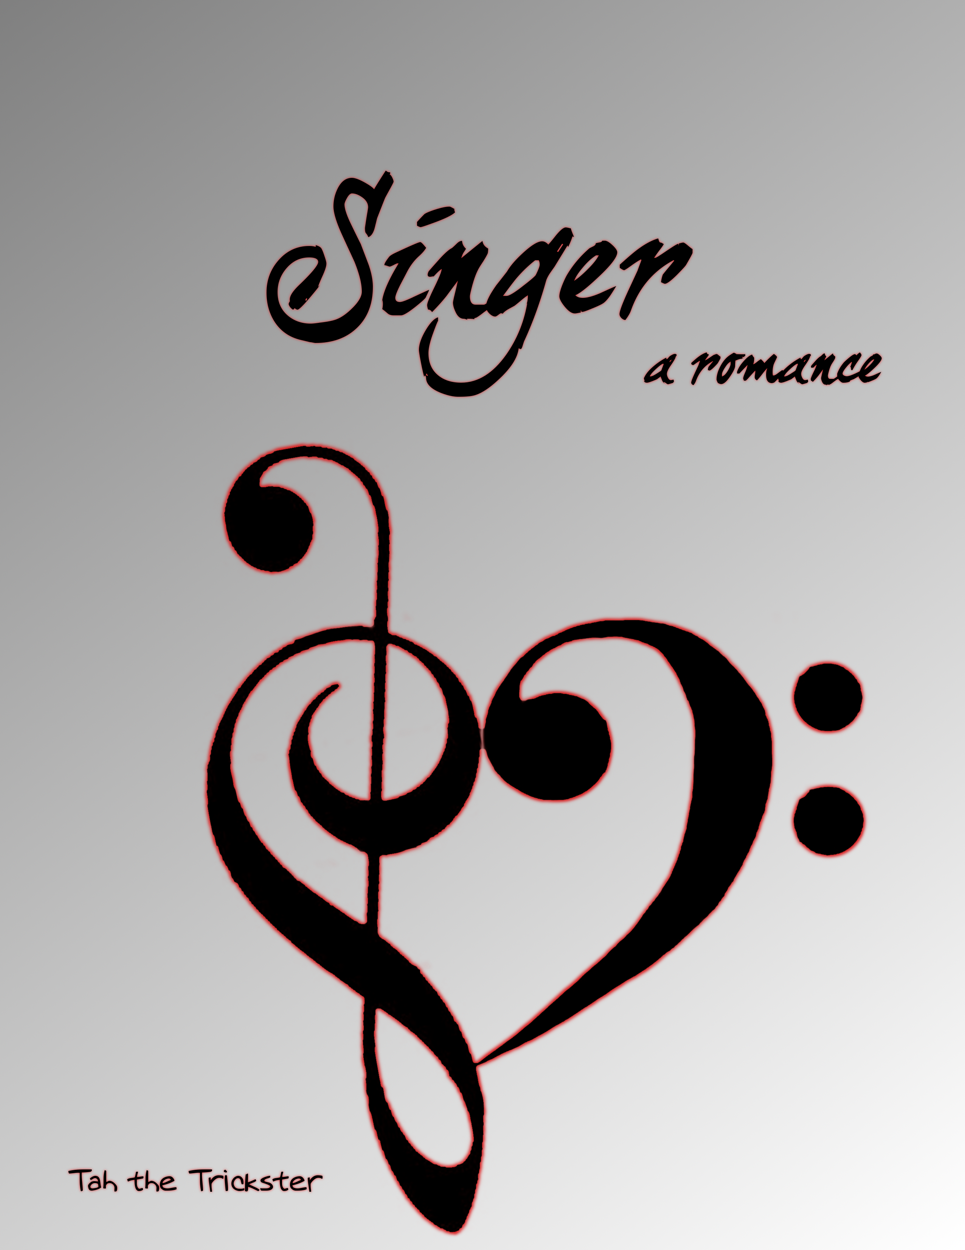 Singer: A Romance